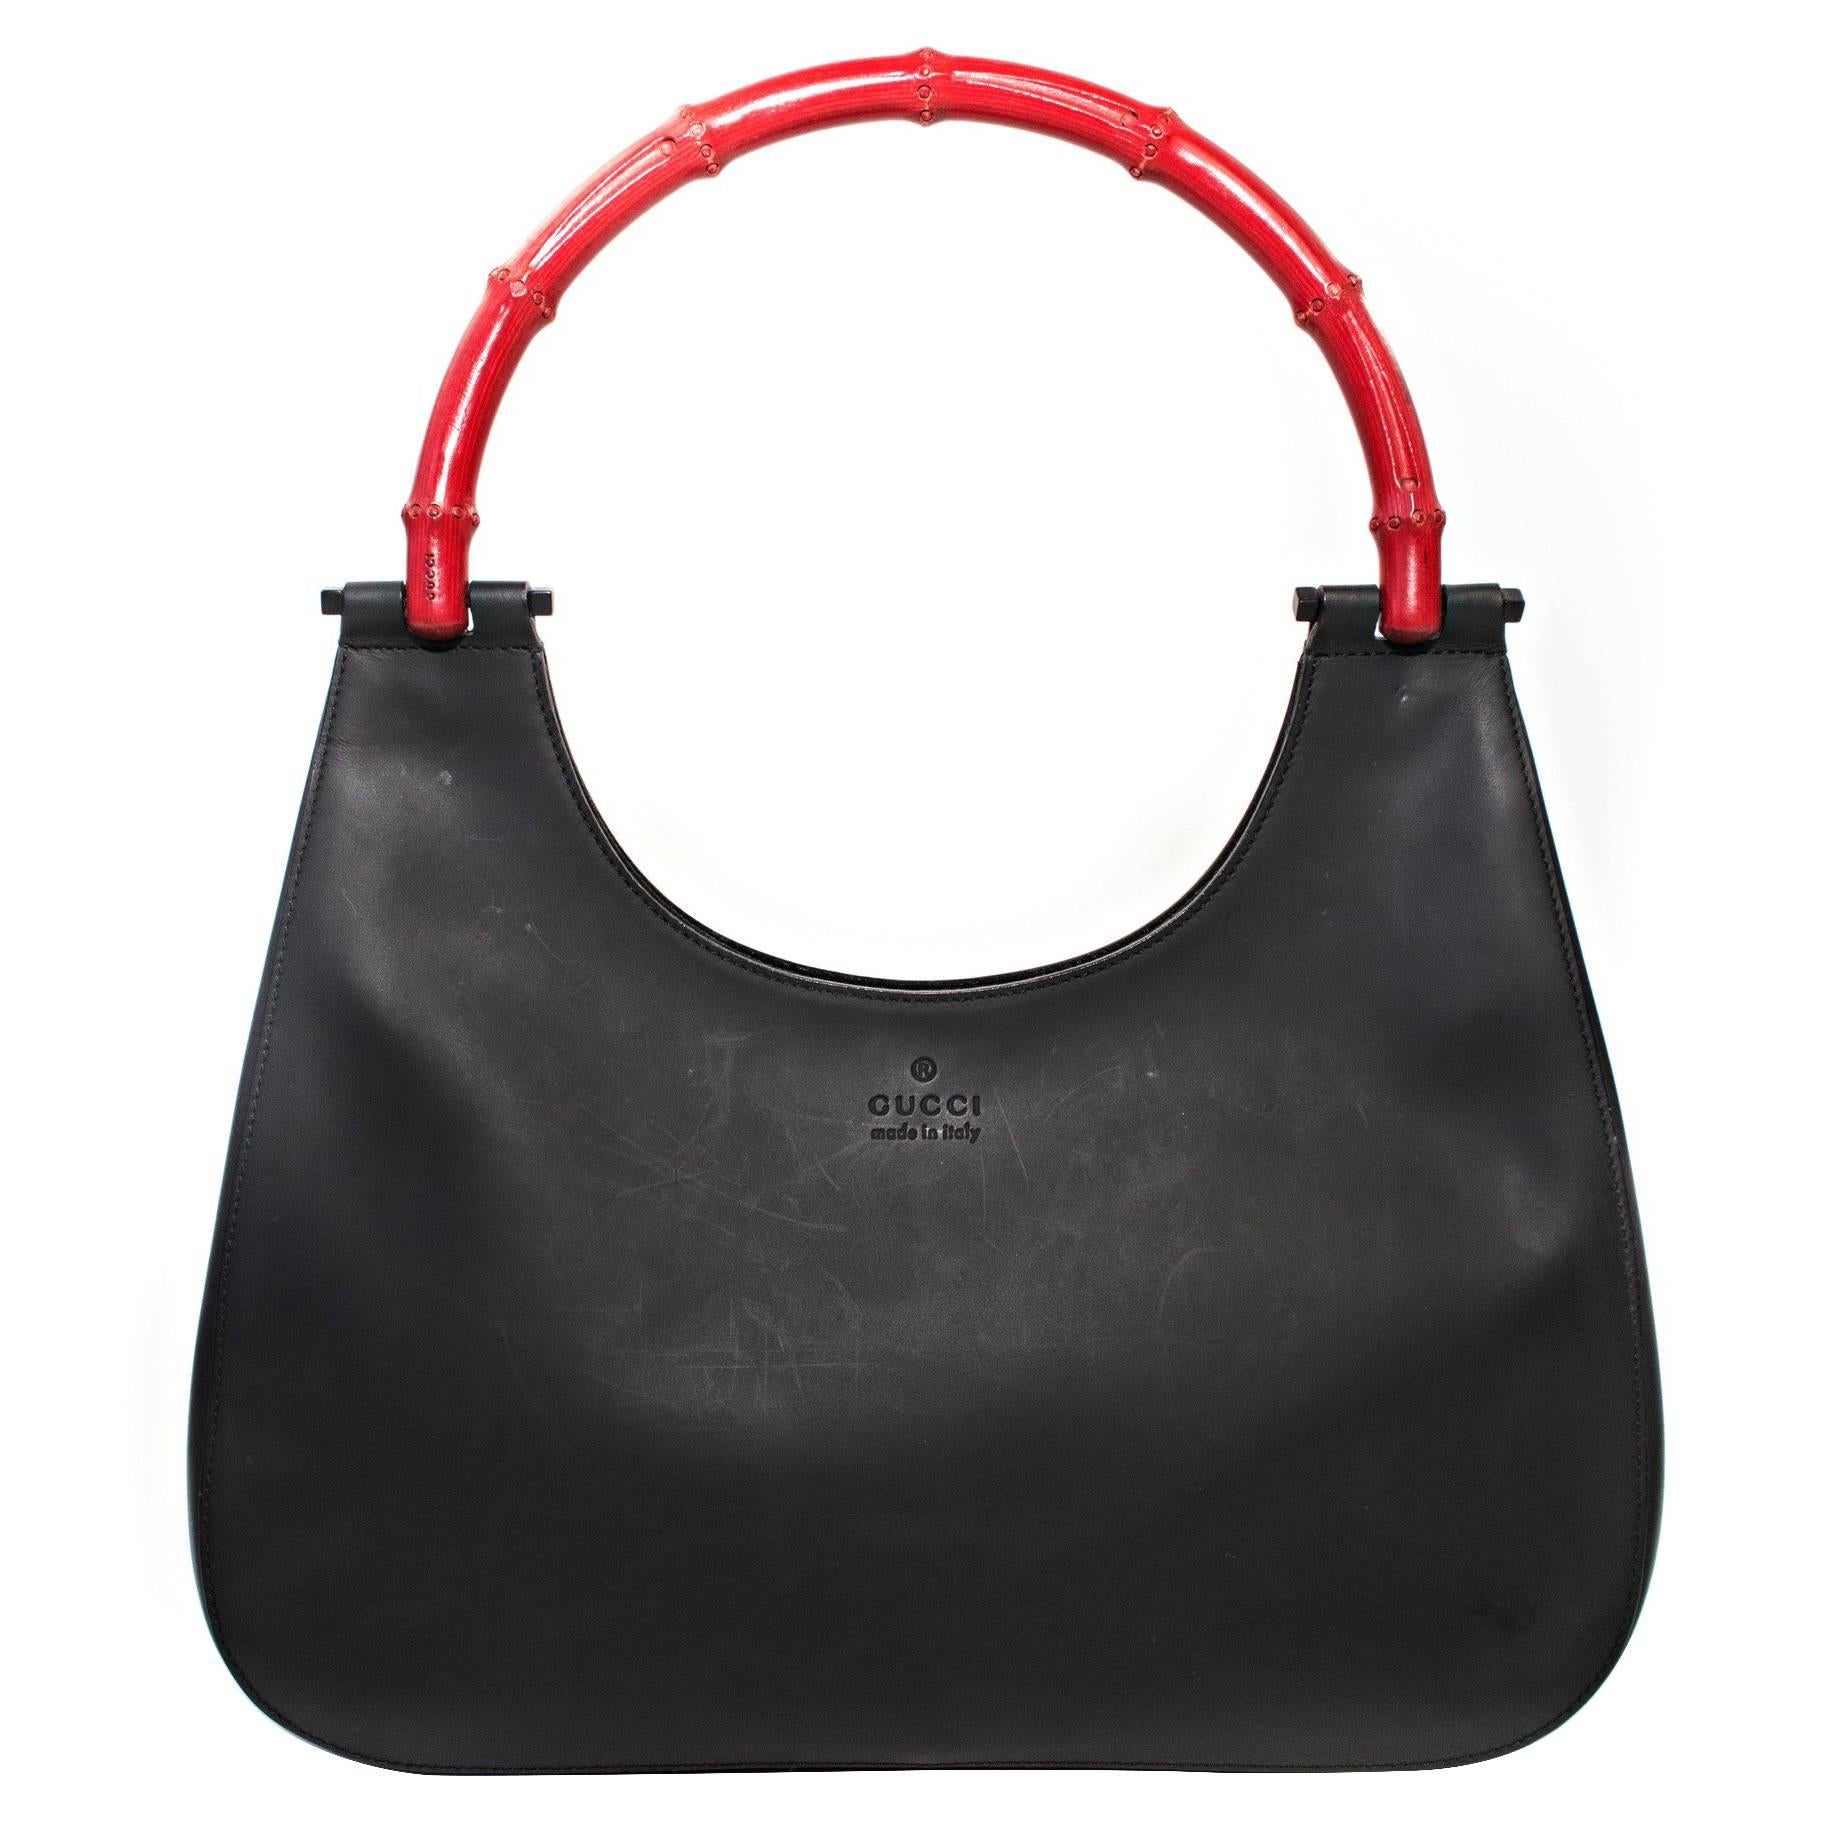 Gucci Matte Black Hobo Style Handbag with Bamboo Handle 